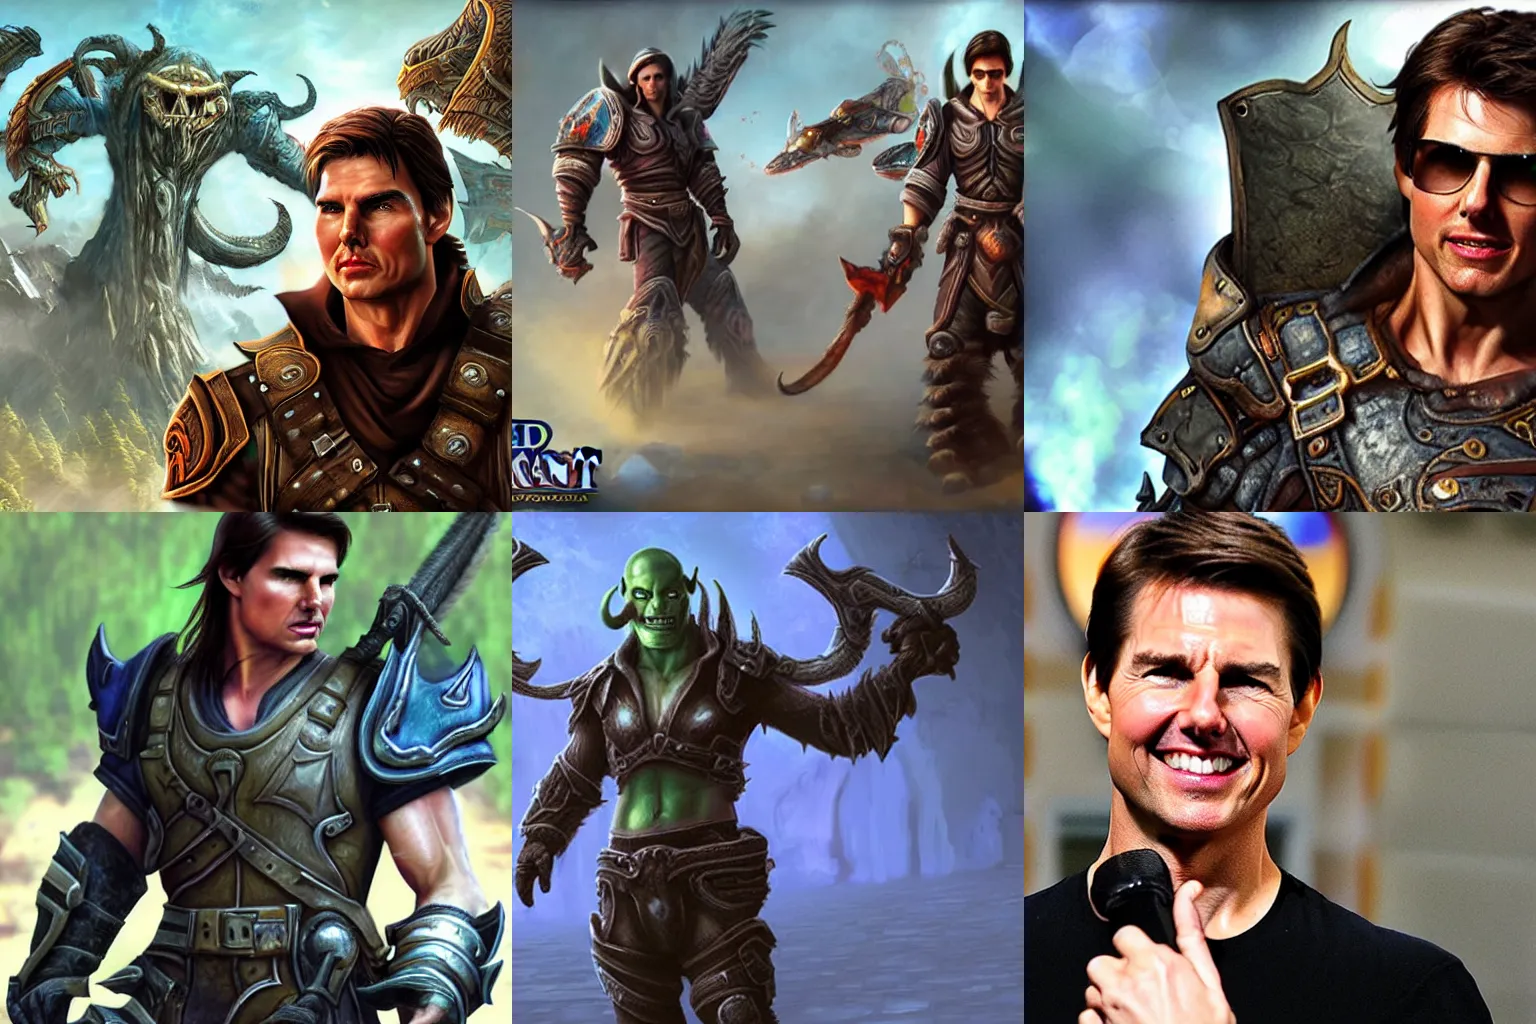 Image similar to Tom Cruise in World of Warcraft